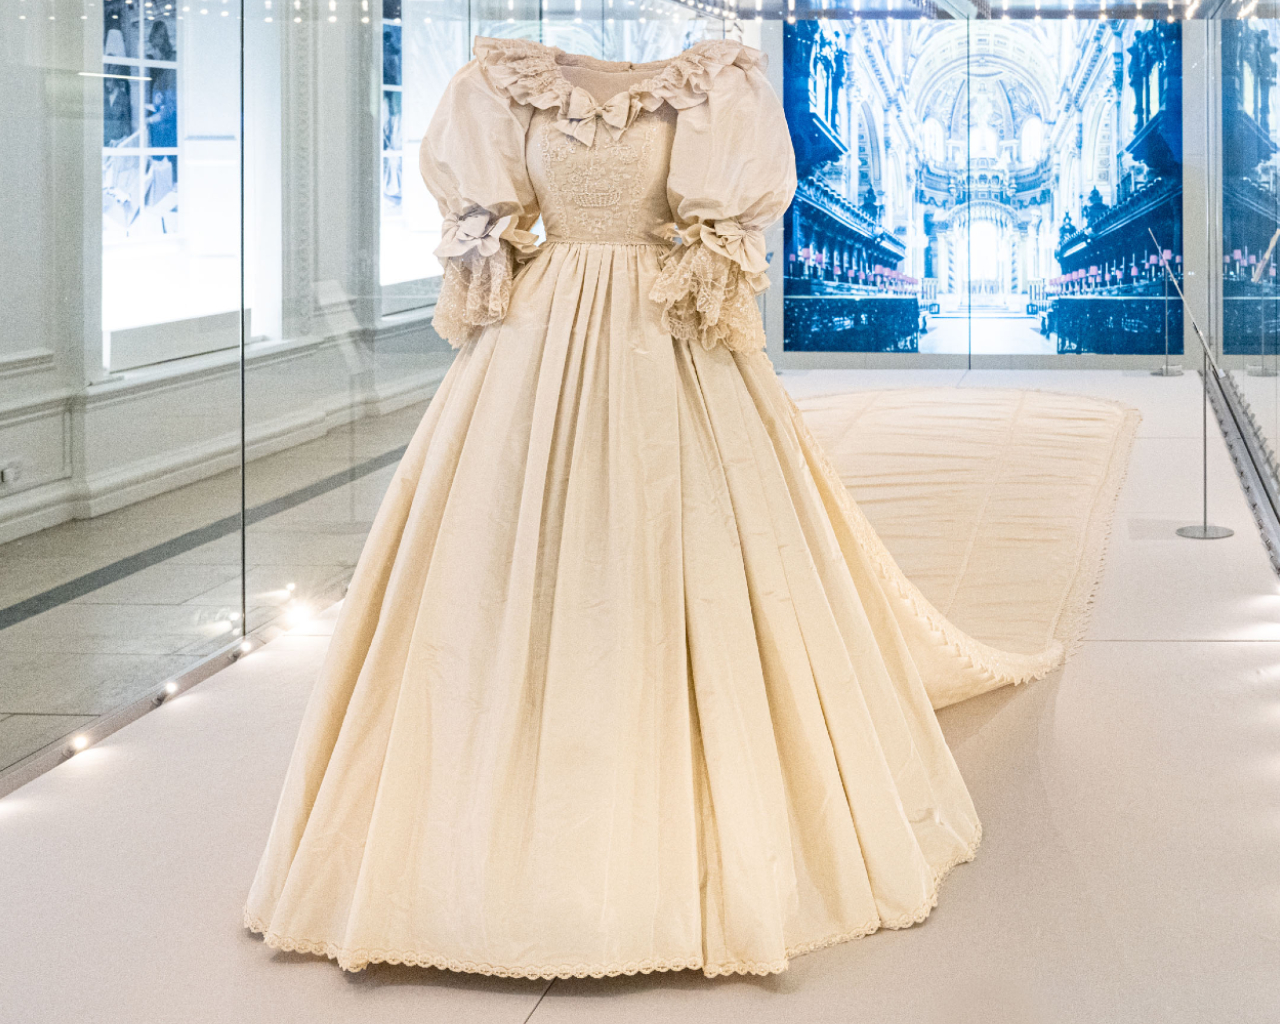 Inside the Epic Story of Princess Diana's Wedding Dress